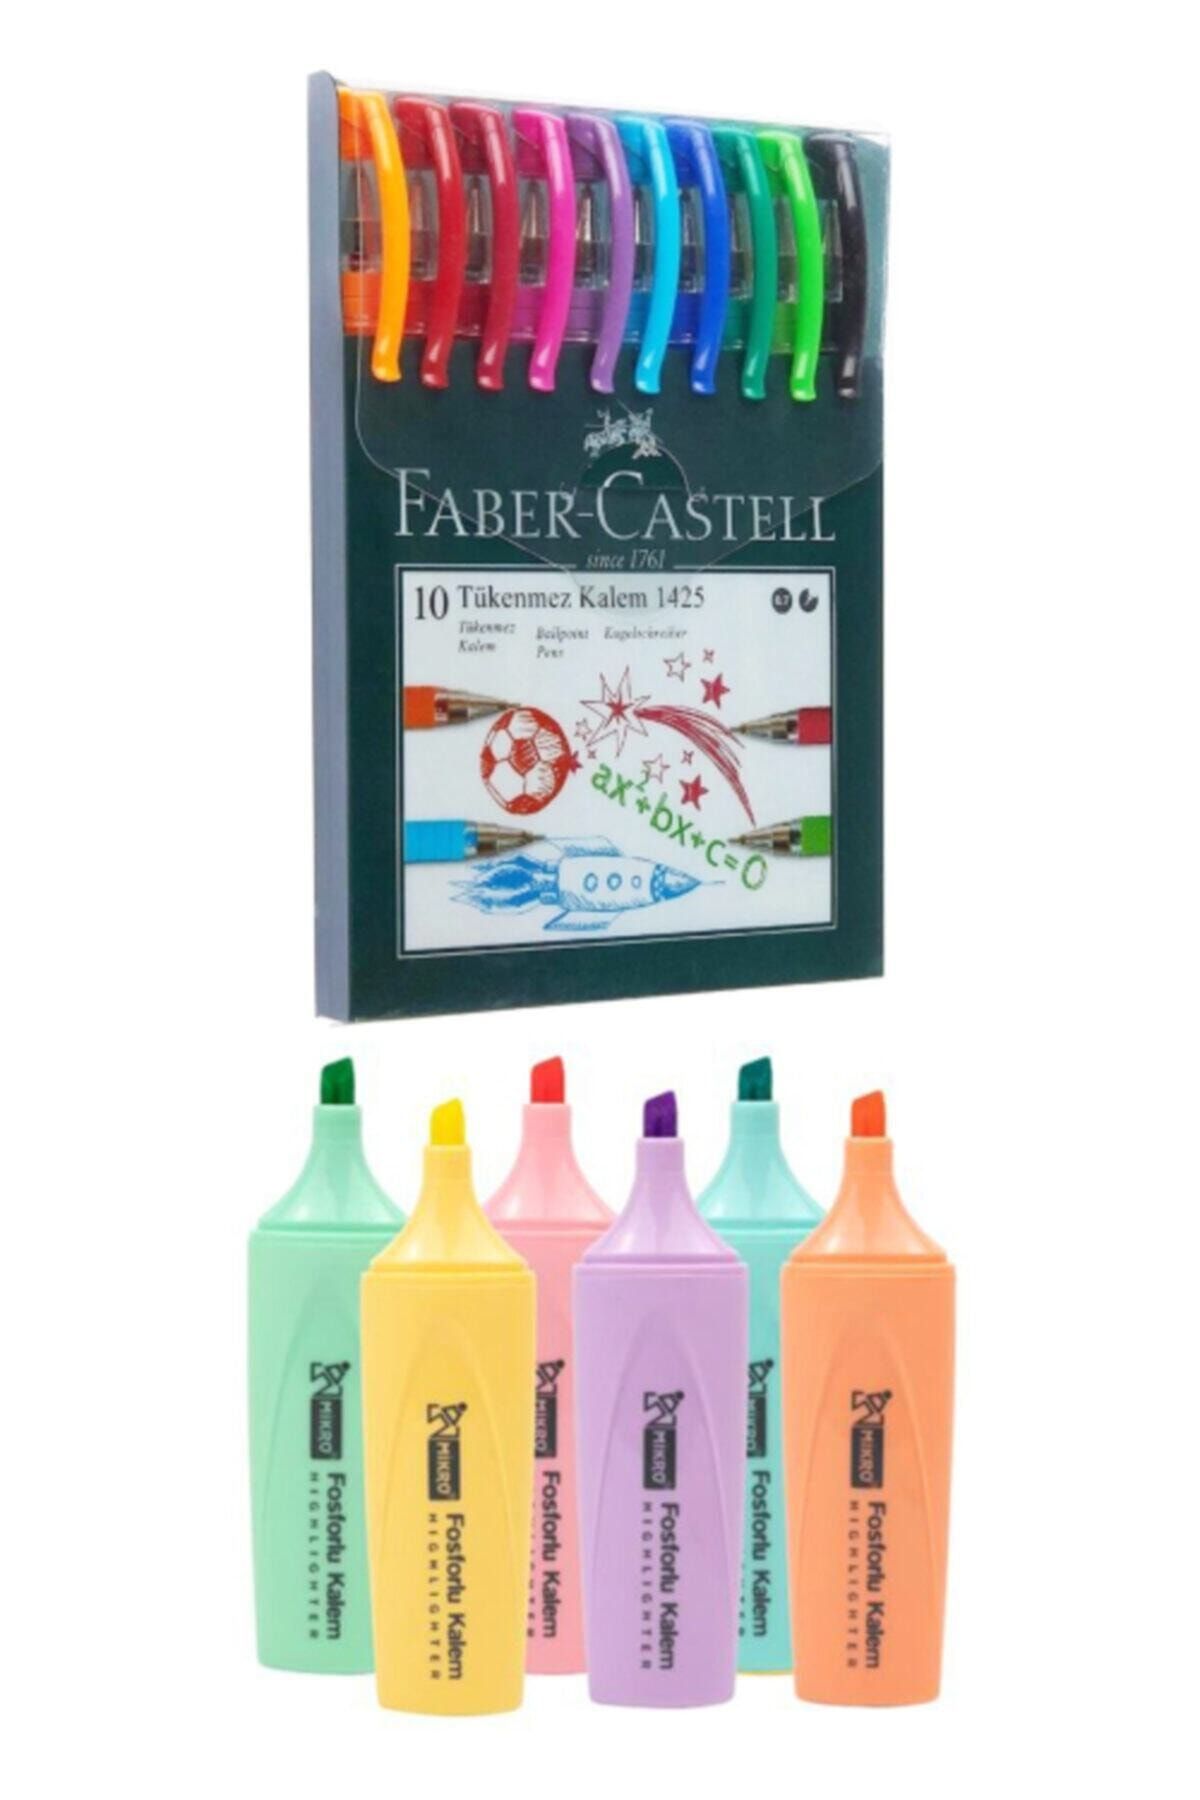 Faber Castell 10 Renk Tükenmez Kalem 1425 Mikro 6 Renk Pastel Fosforlu Mk-605 F.k